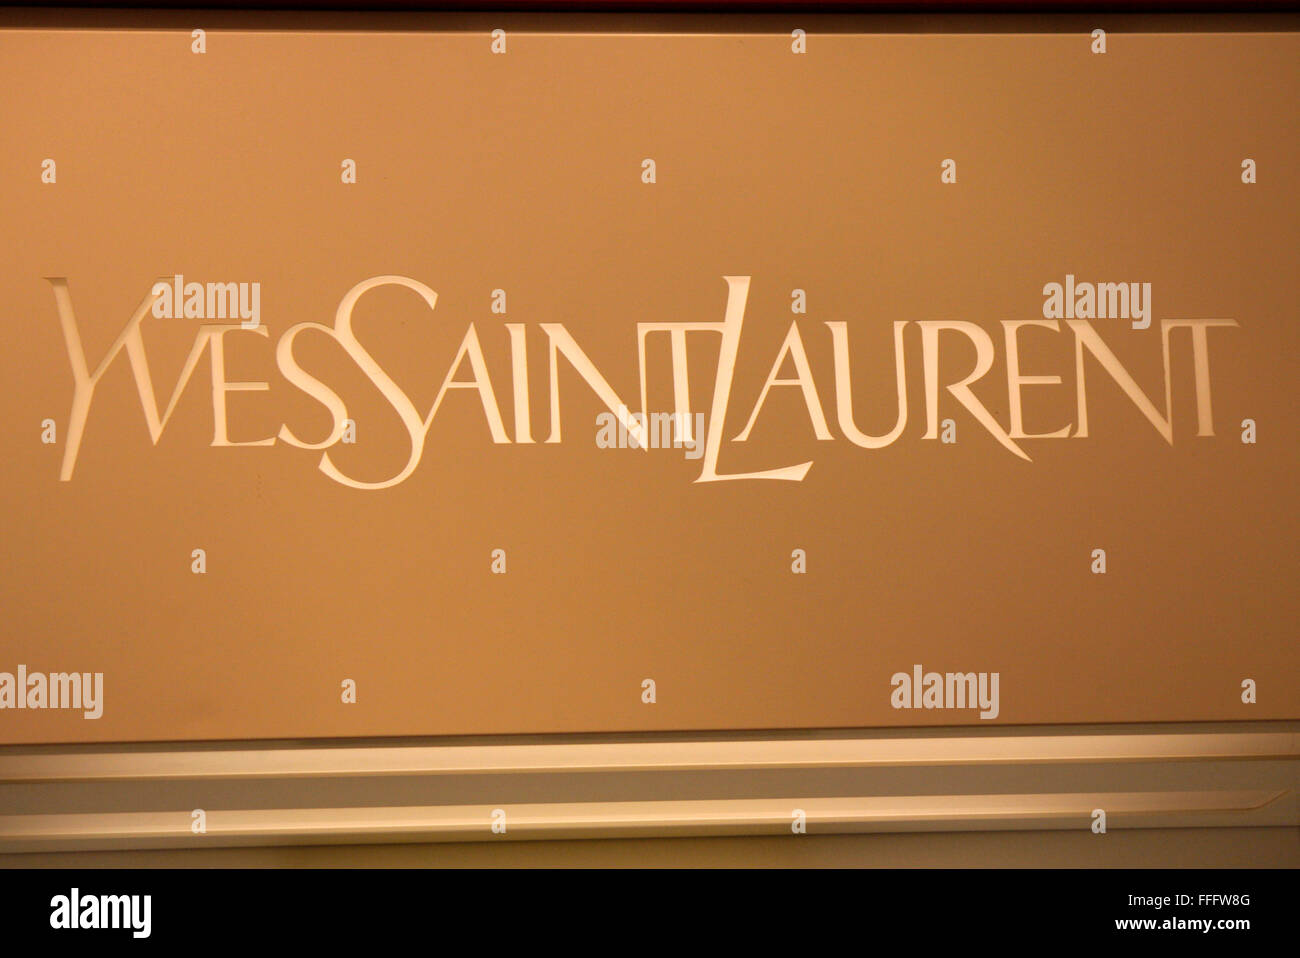 Yves Saint Laurent golden logo, artwork, brown metal background